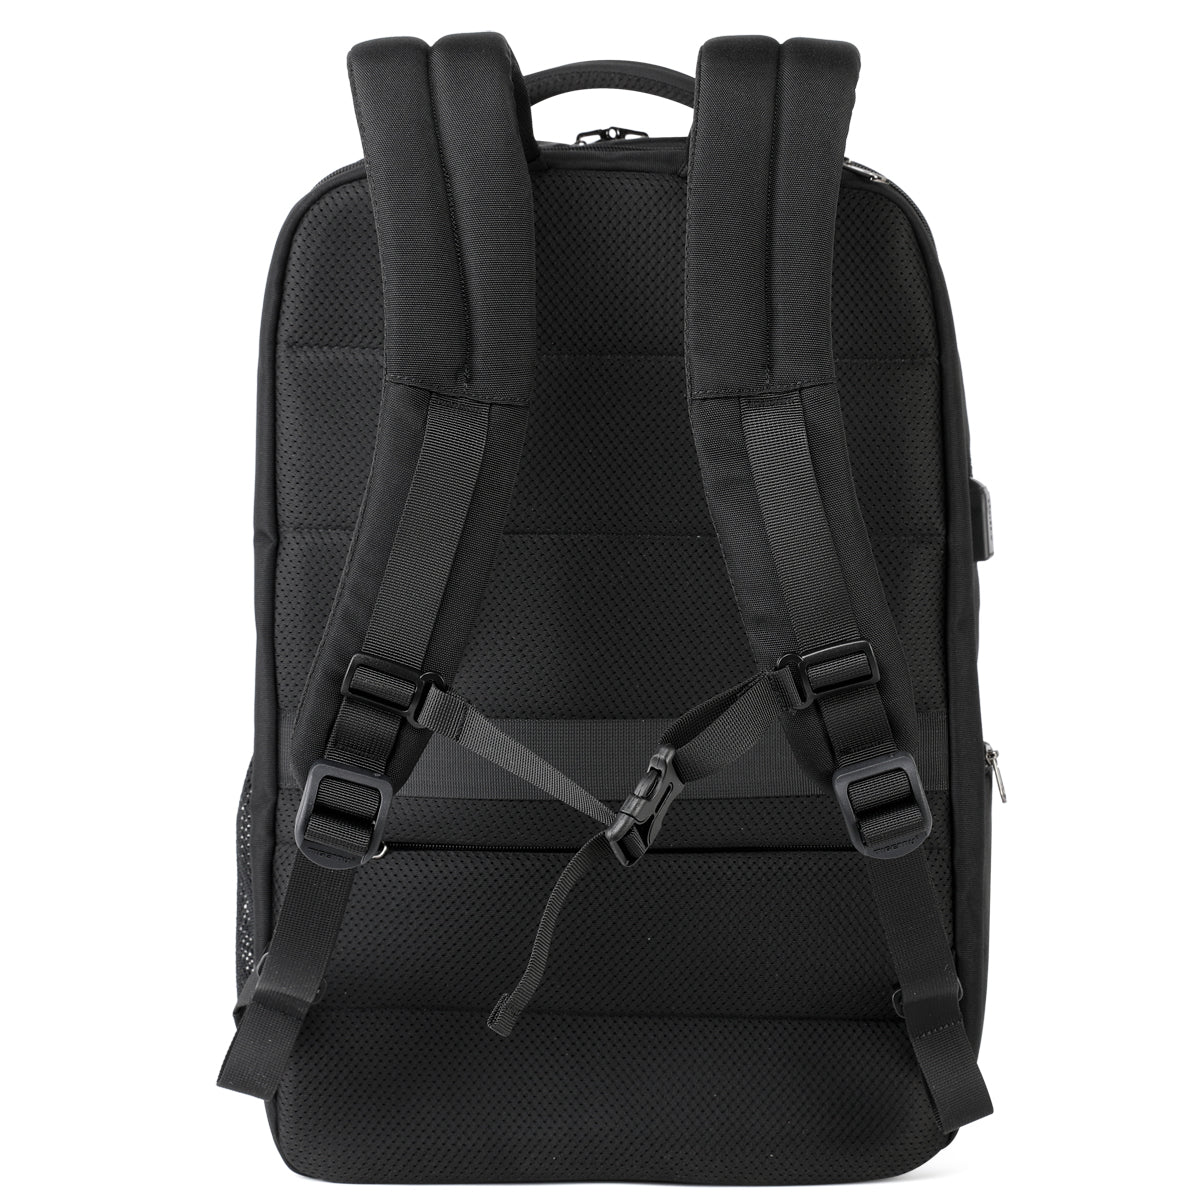 Tigernu T-B3143XL Anti Theft 17 inch Laptop Backpack Bag with FREE Lock